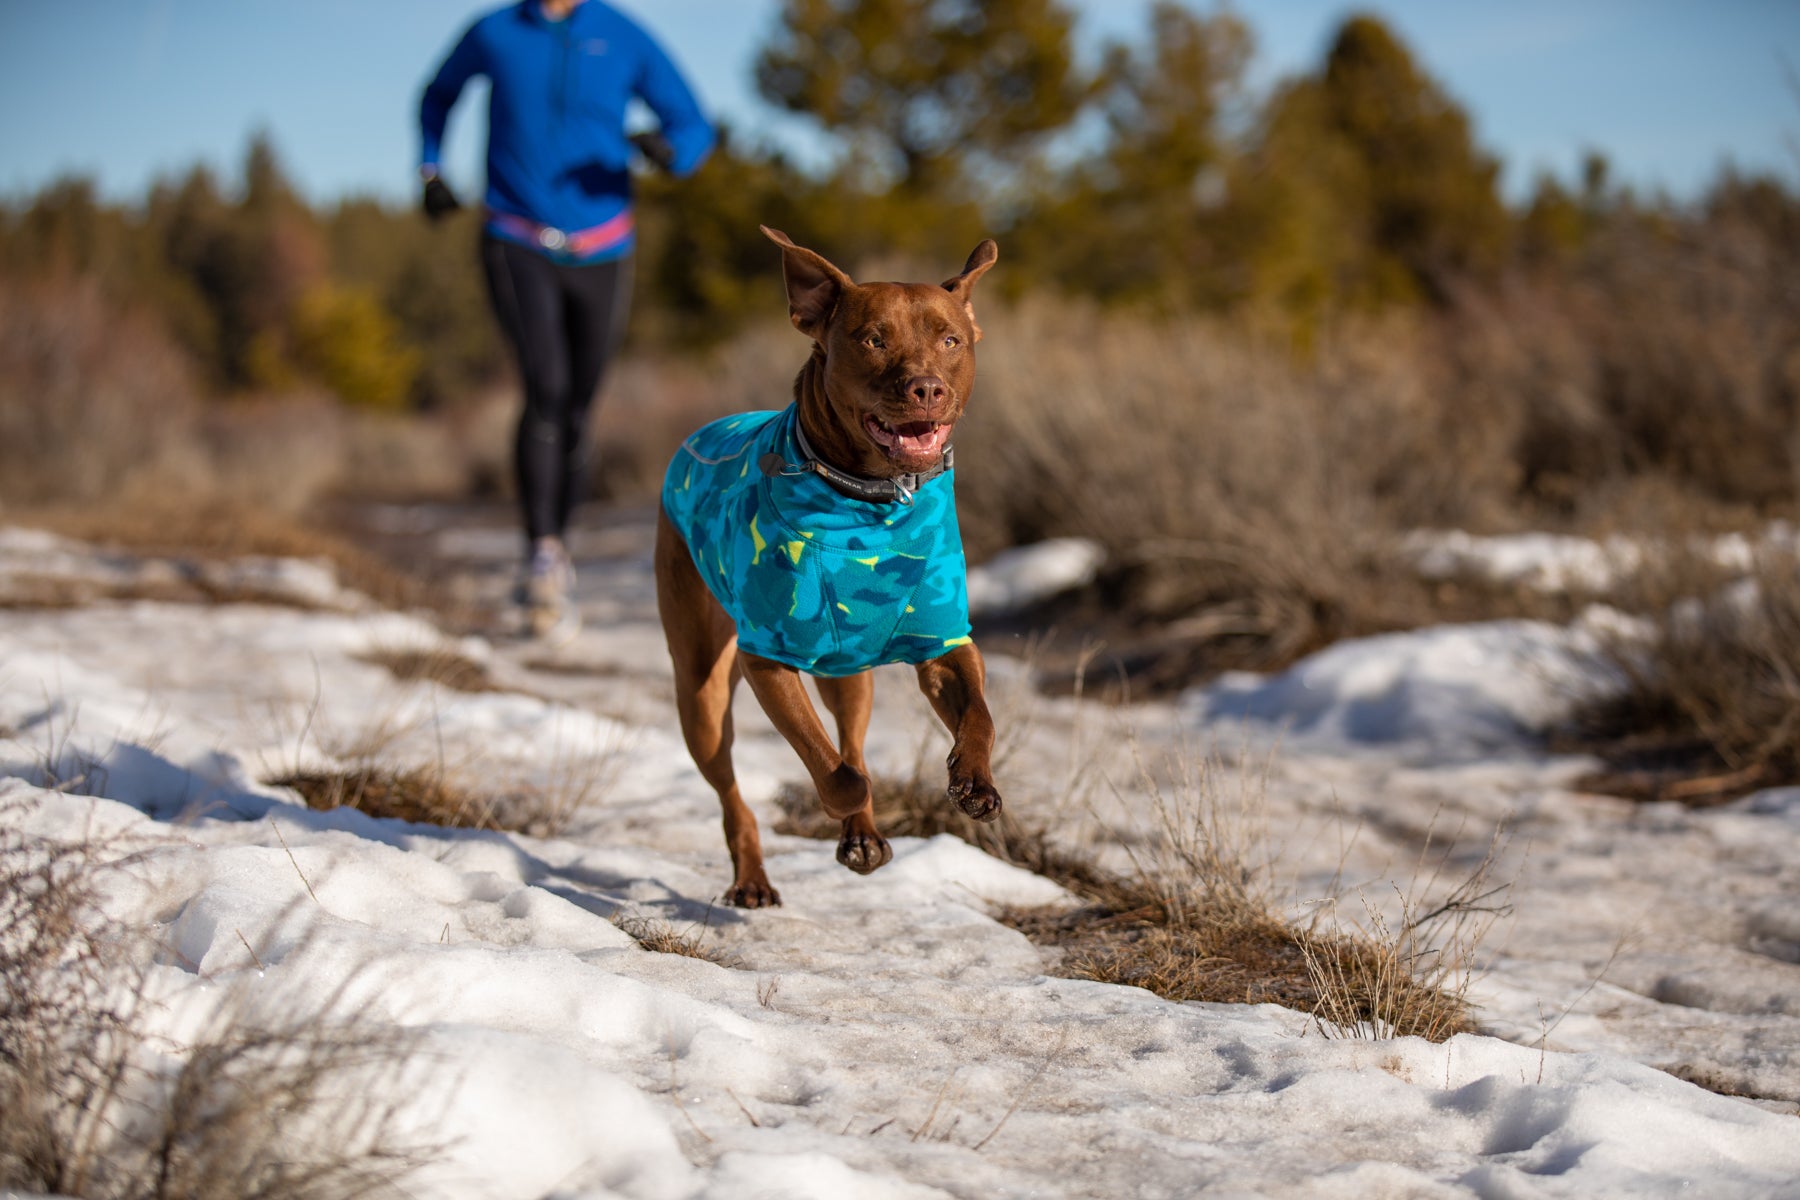 Dog in glacier print climate changer dog fleece runs along snowy trail.